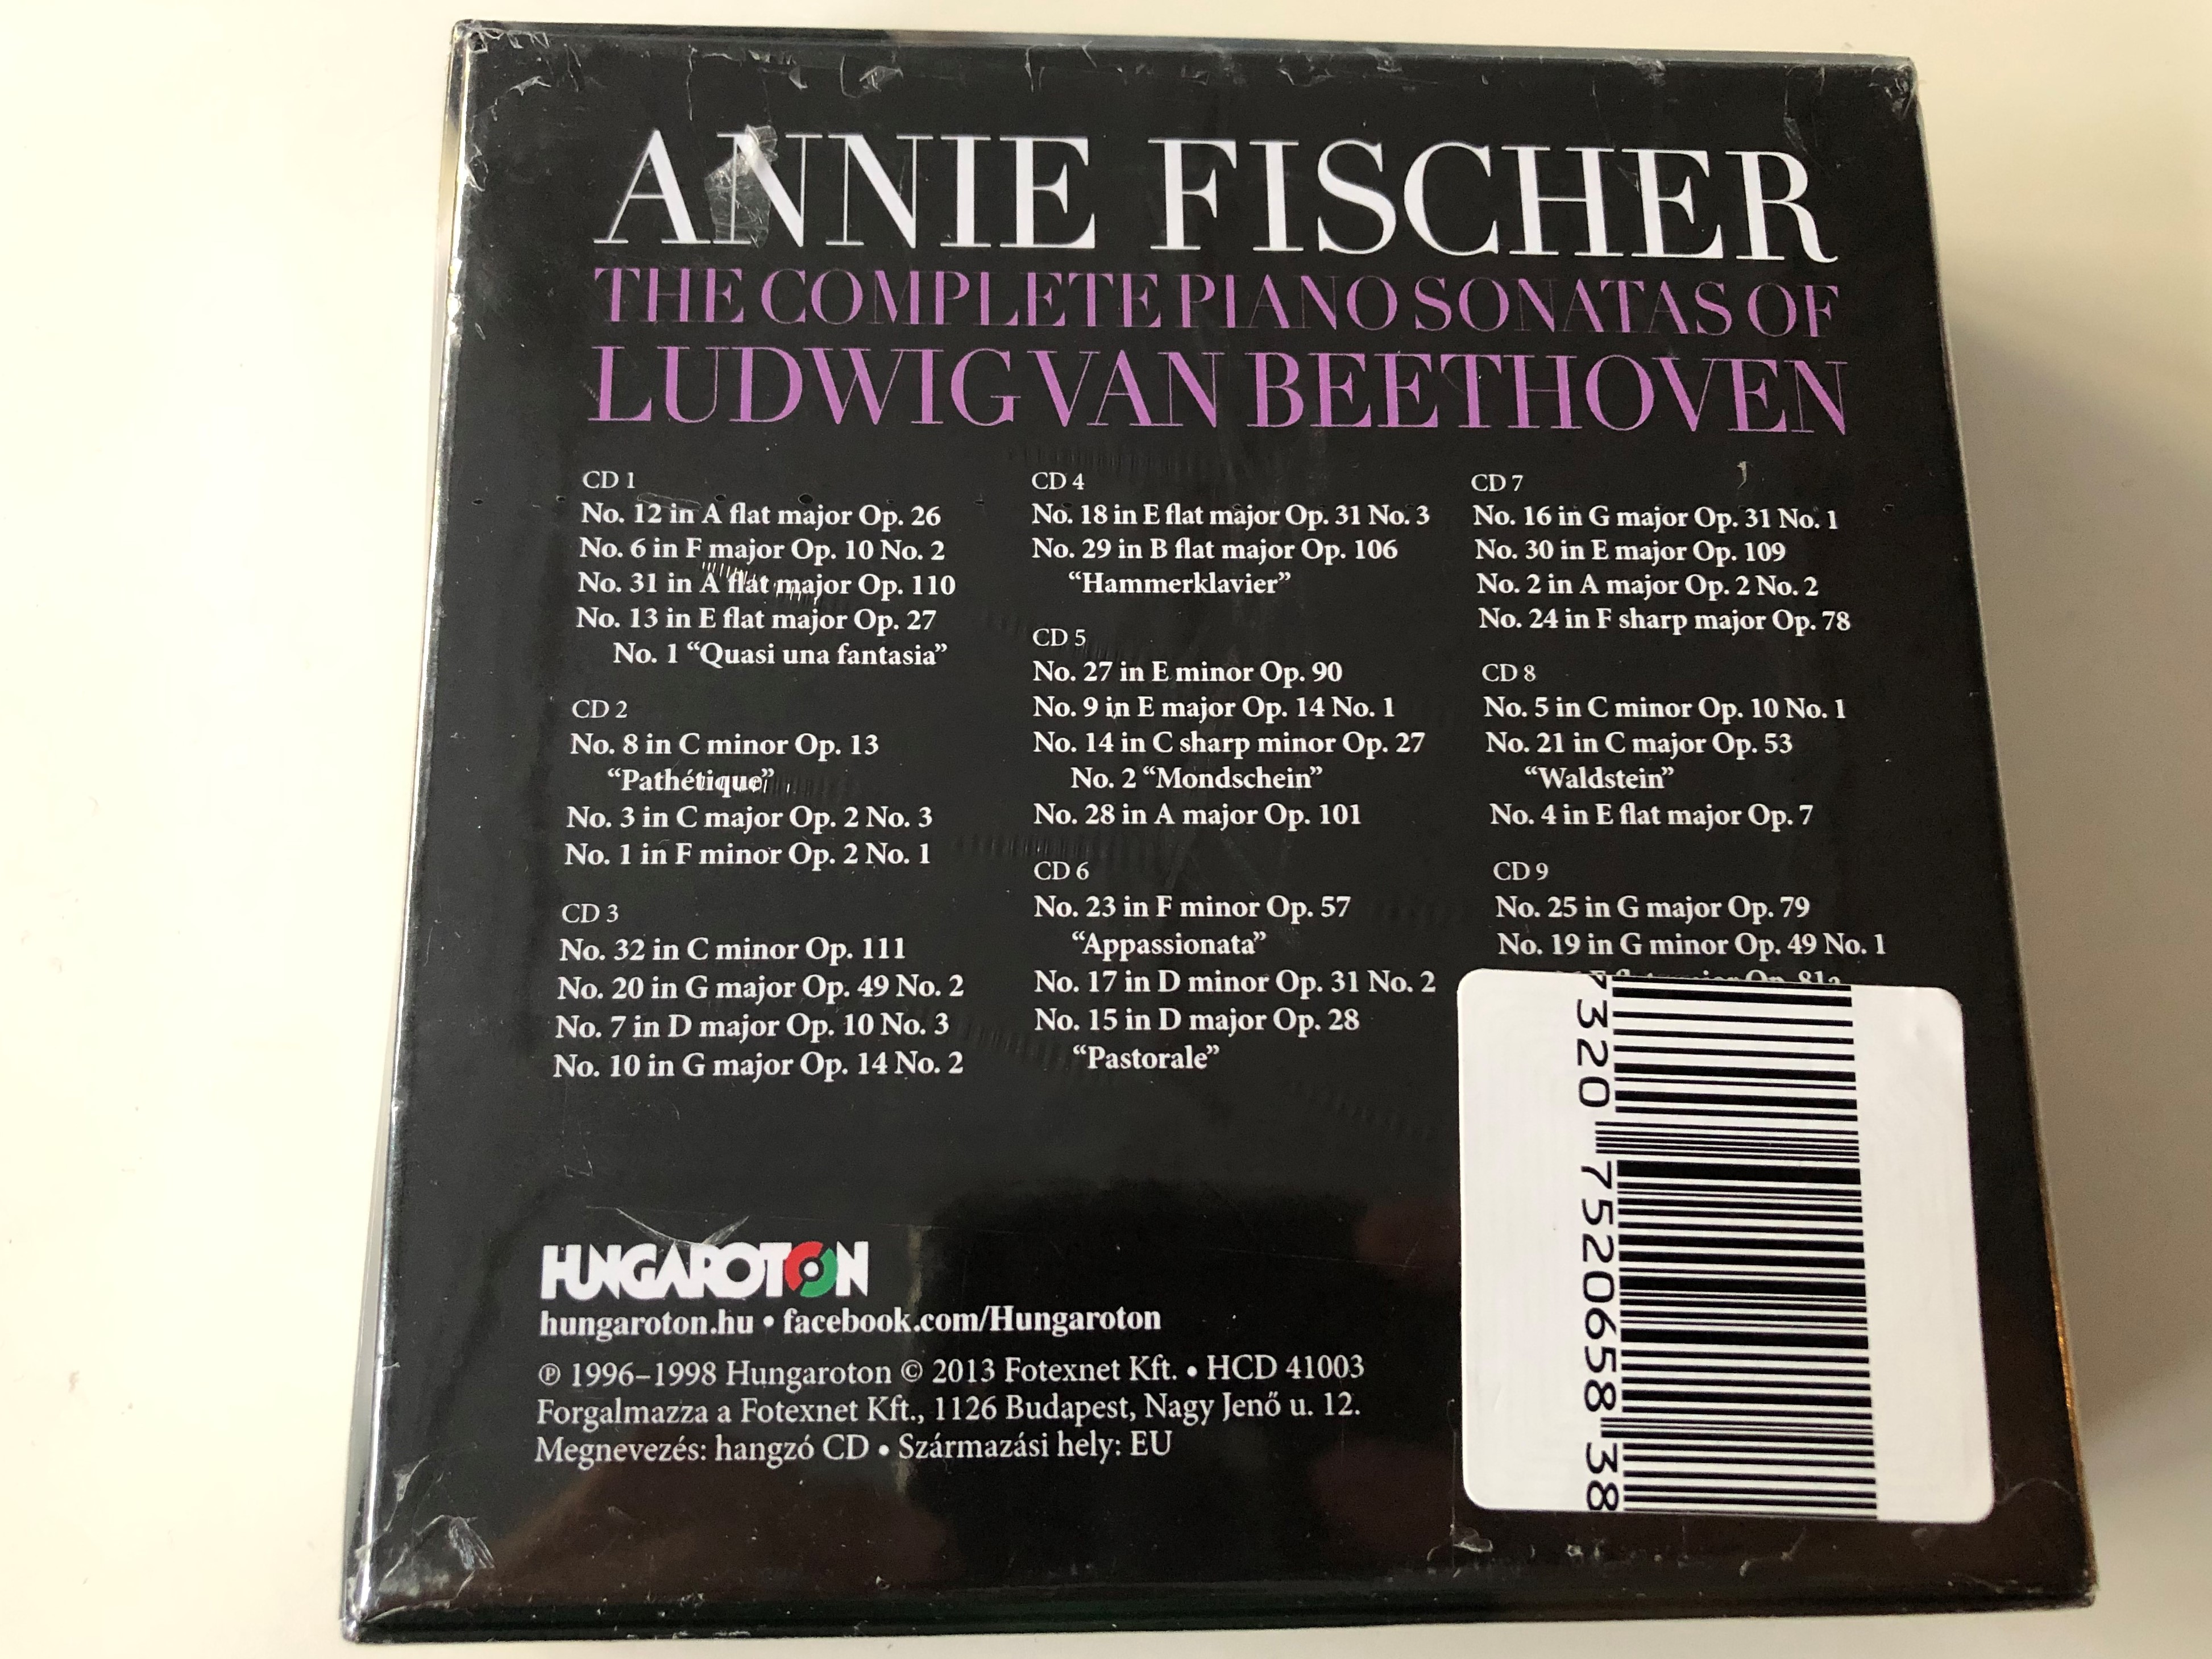 annie-fischer-the-complete-piano-sonatas-of-ludwig-van-beethoven-hungaroton-9x-audio-cd-2013-hcd41003-4-.jpg